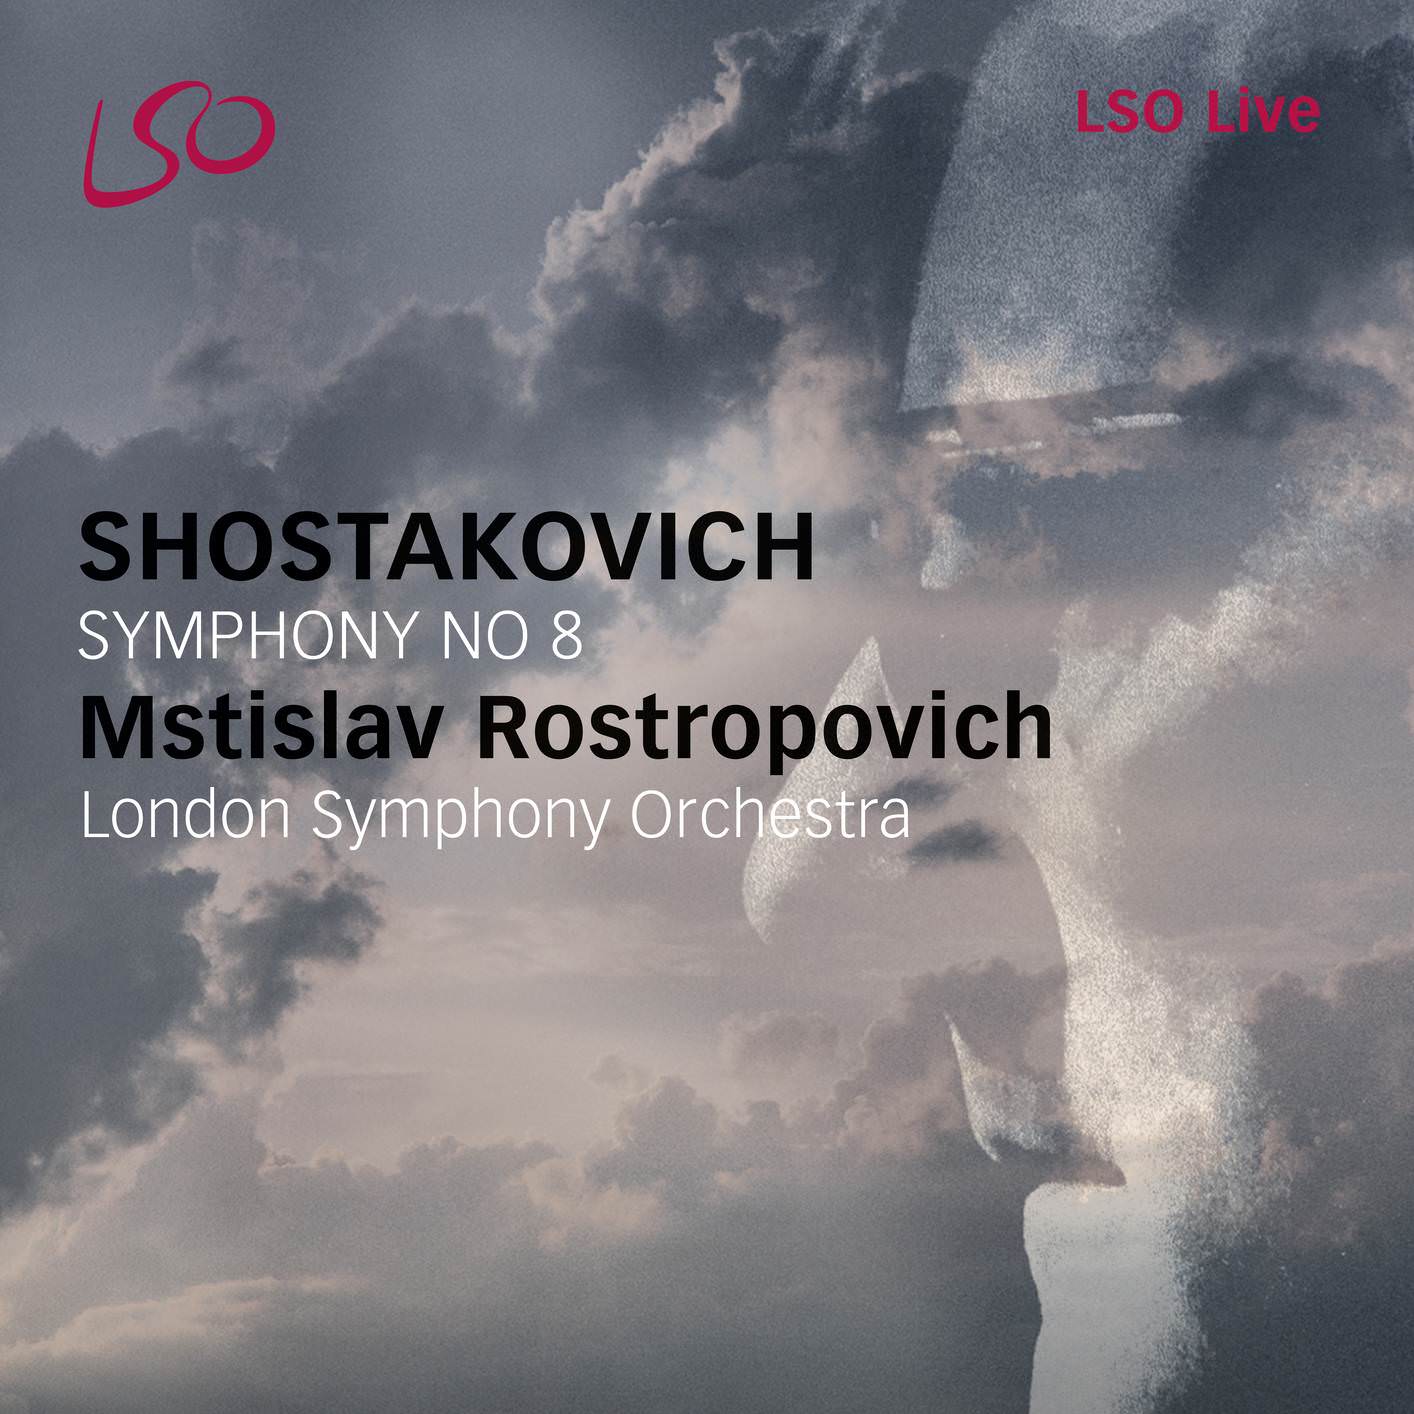 London Symphony Orchestra & Mstislav Rostropovich - Shostakovich: Symphony No. 8 (2005/2018) [FLAC 24bit/96kHz]